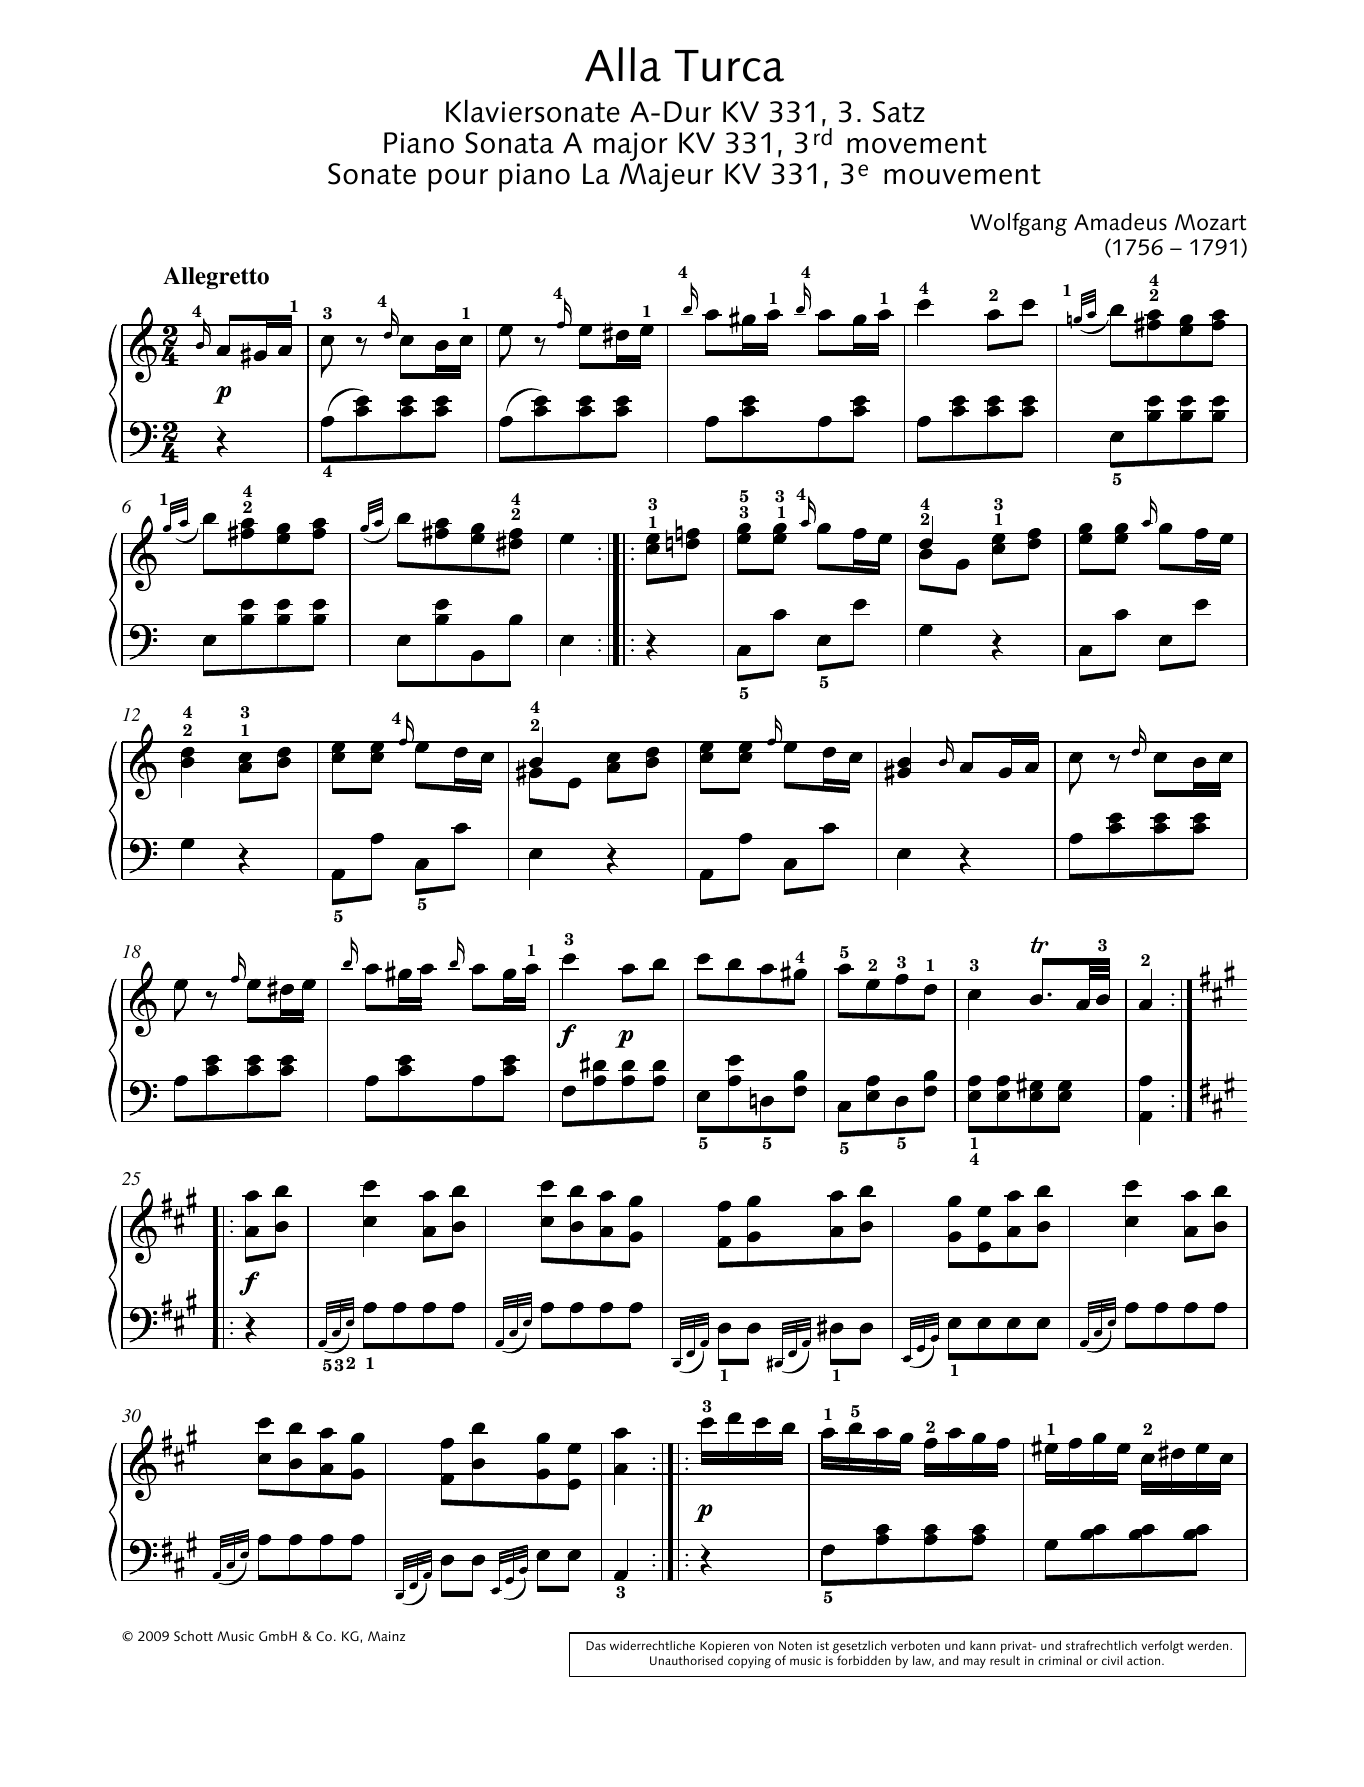 Download Wolfgang Amadeus Mozart Alla Turca Sheet Music